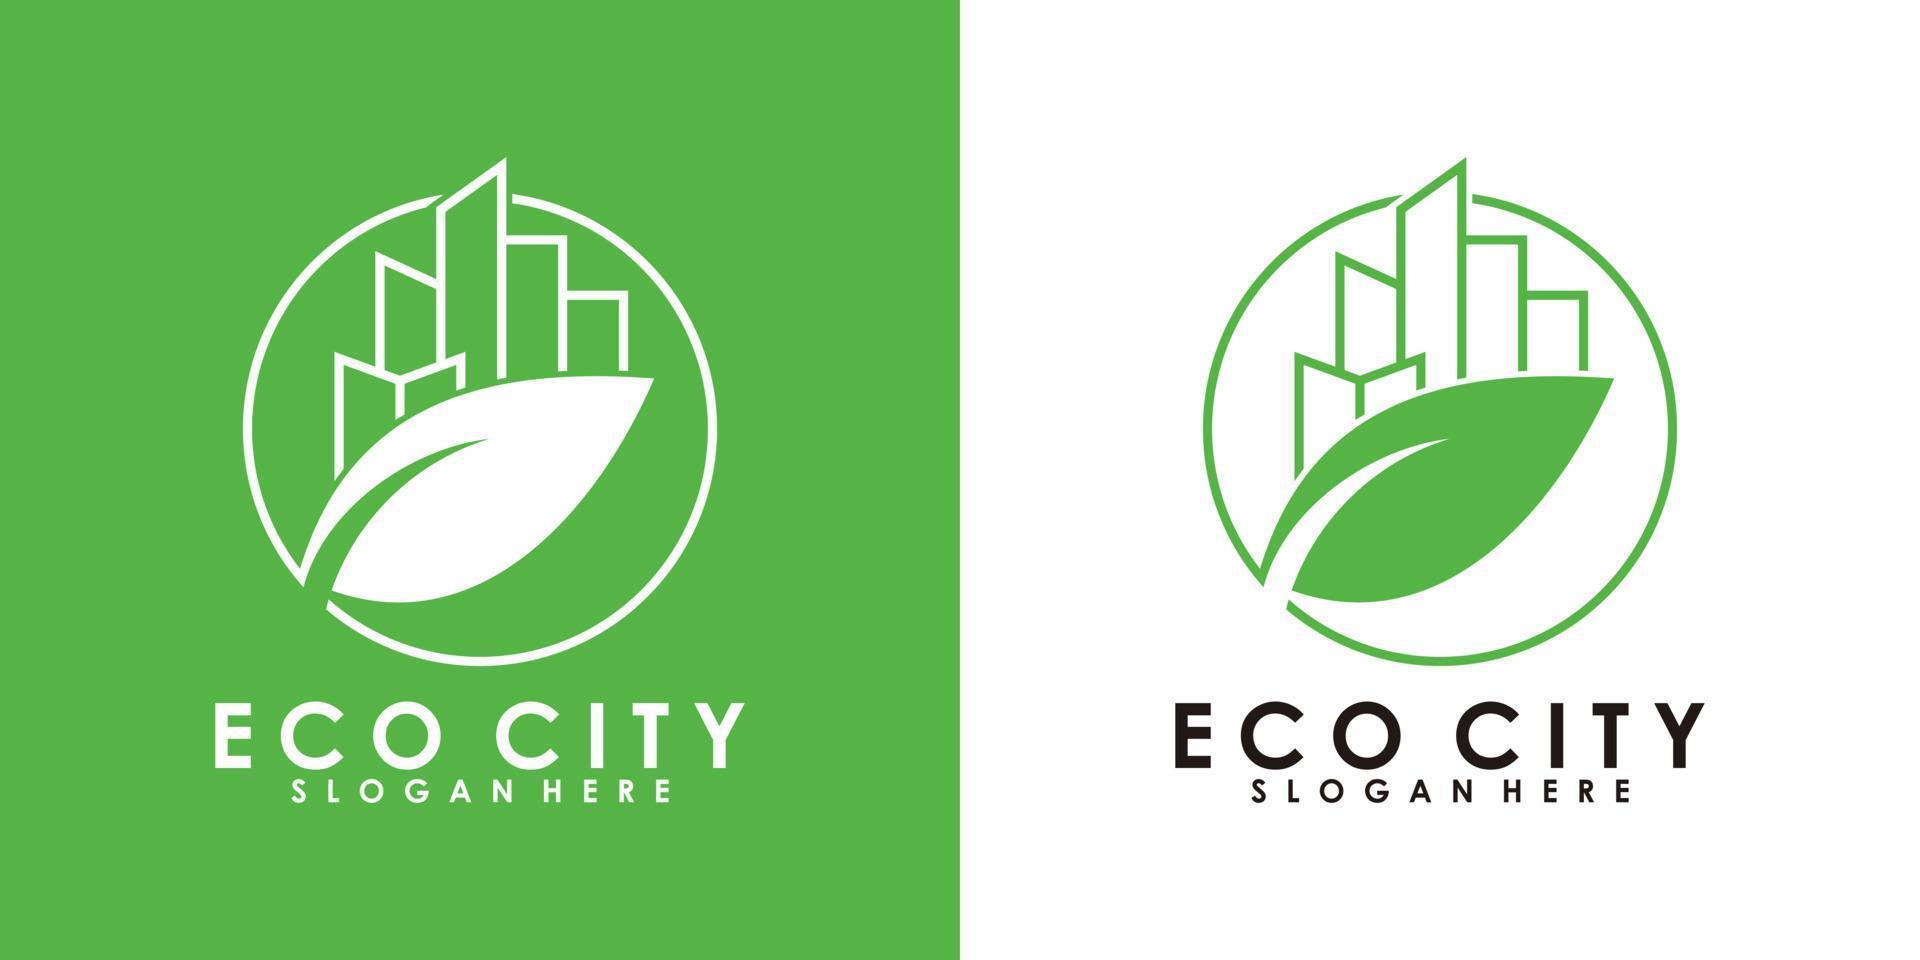 eco city logo design blanc moderen style vecteur premium